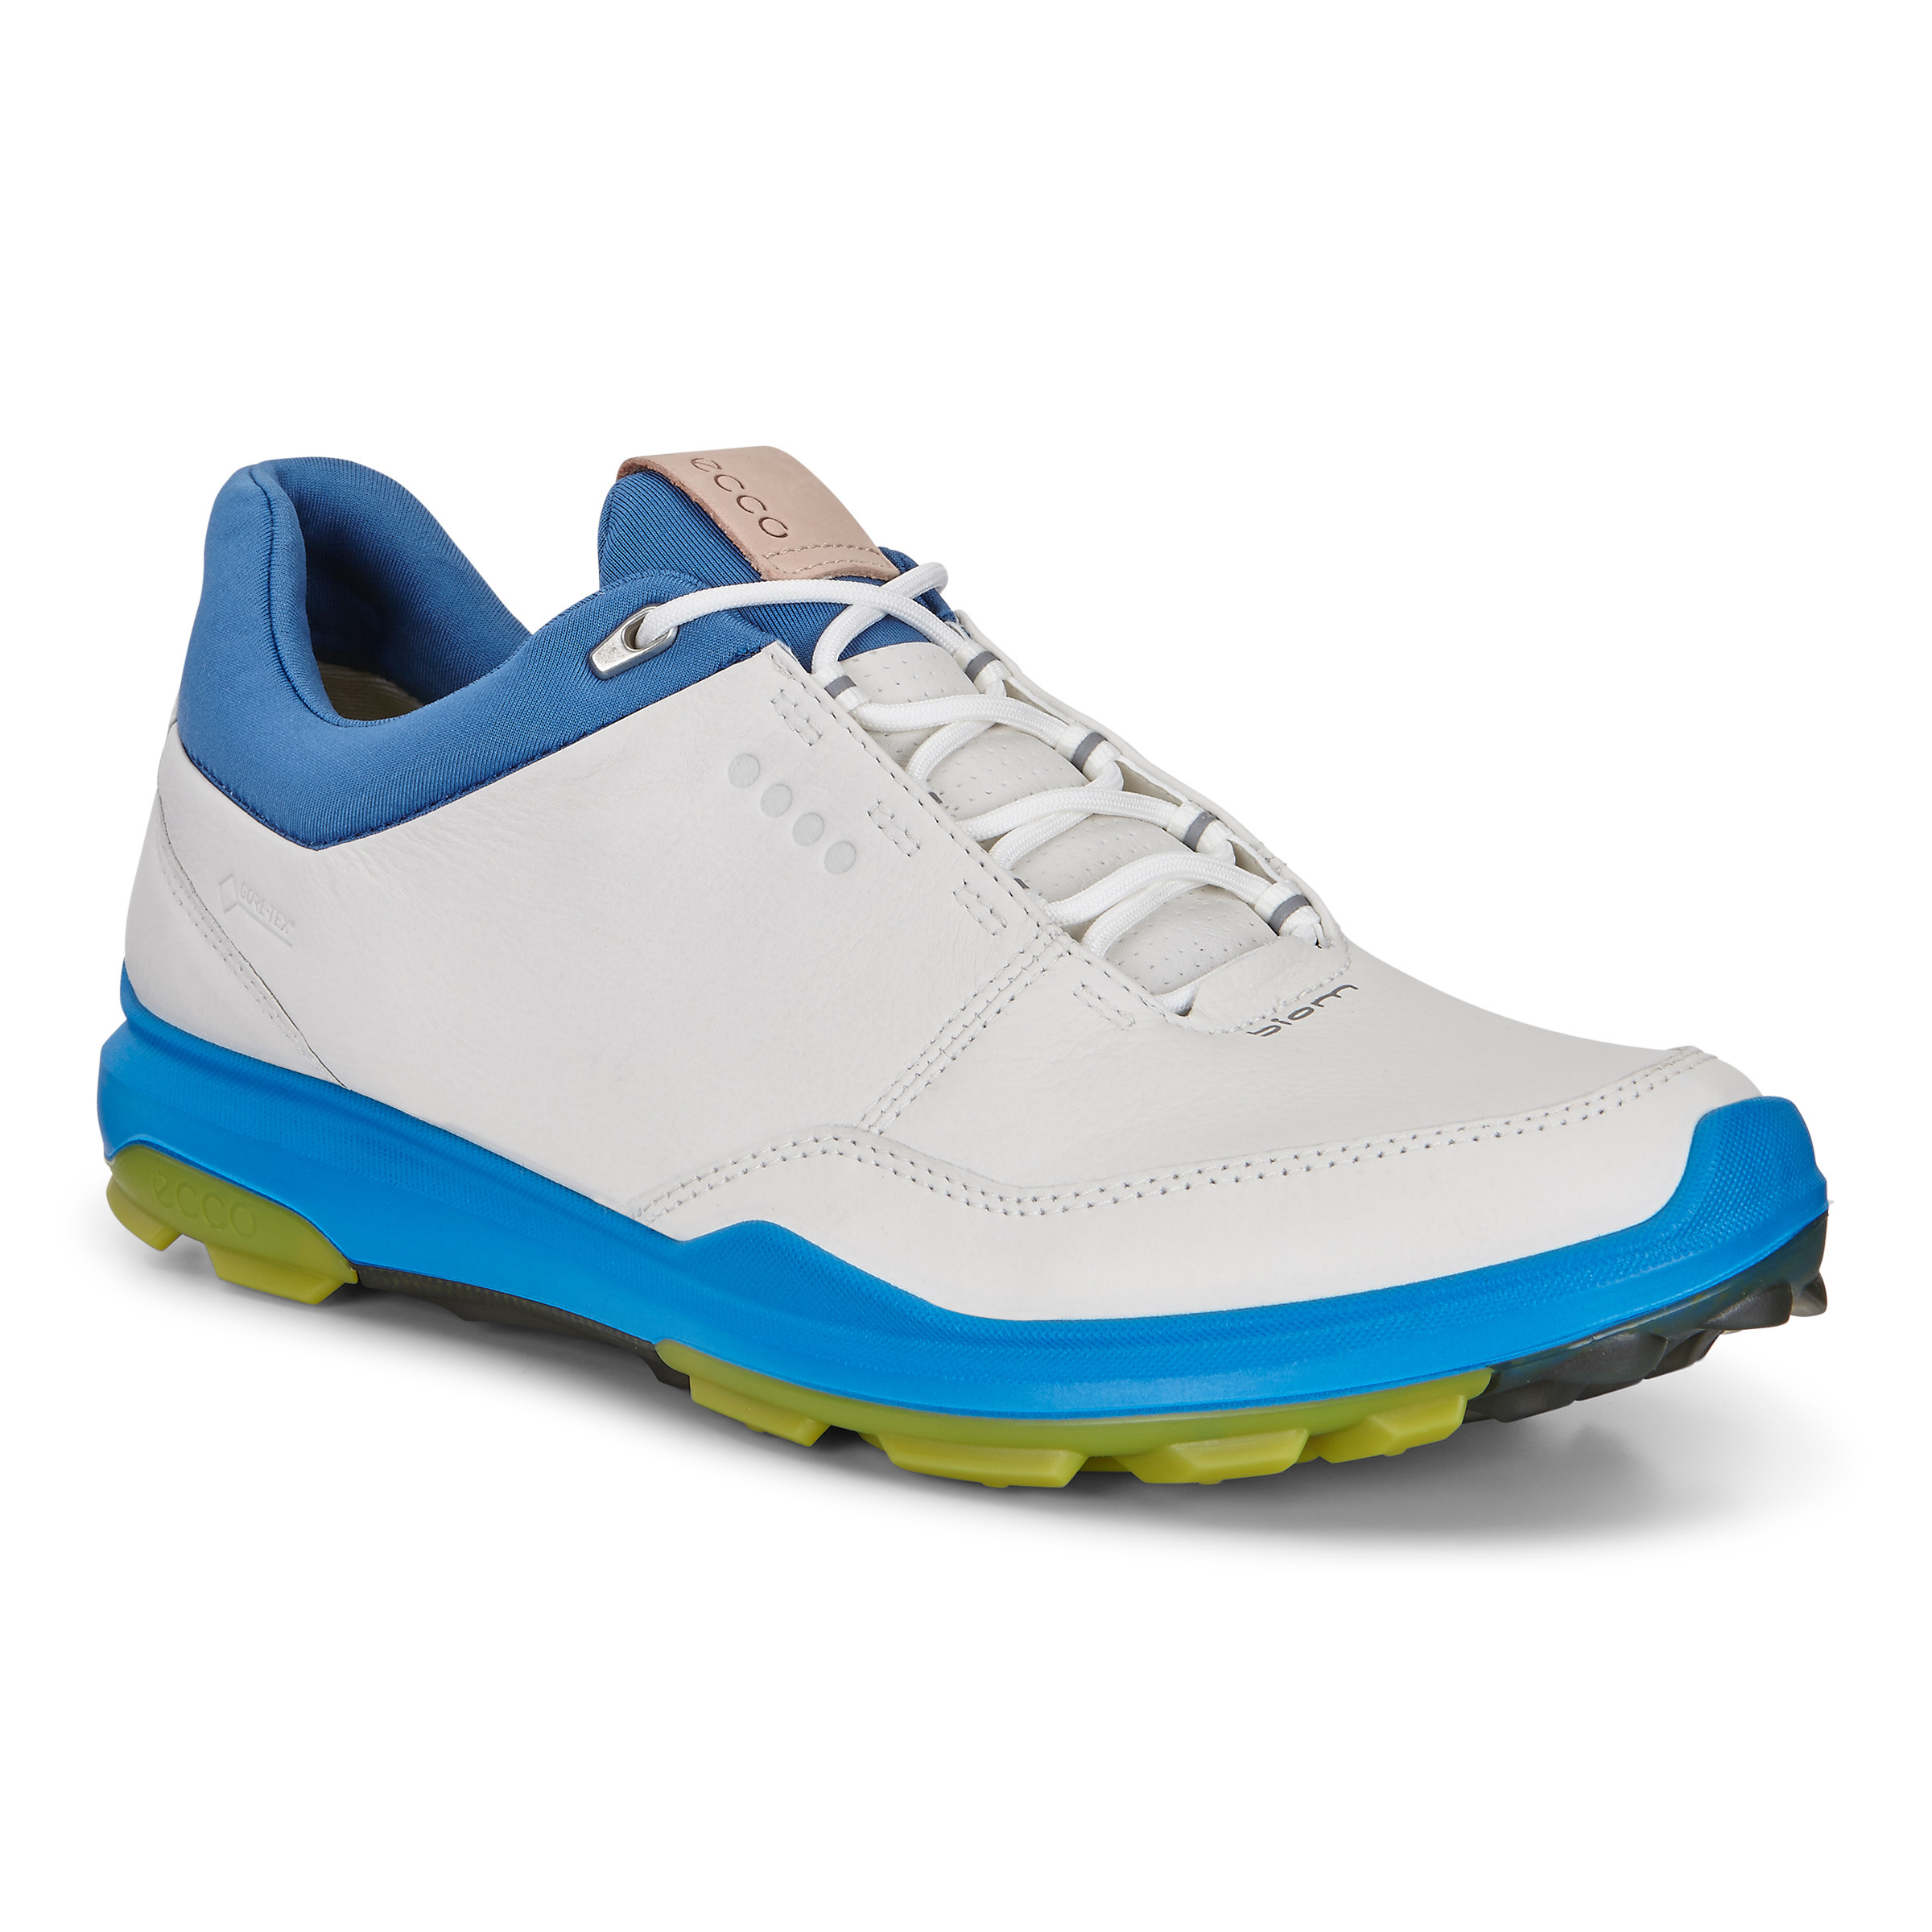 ecco men's biom hybrid 3 gtx golf shoes